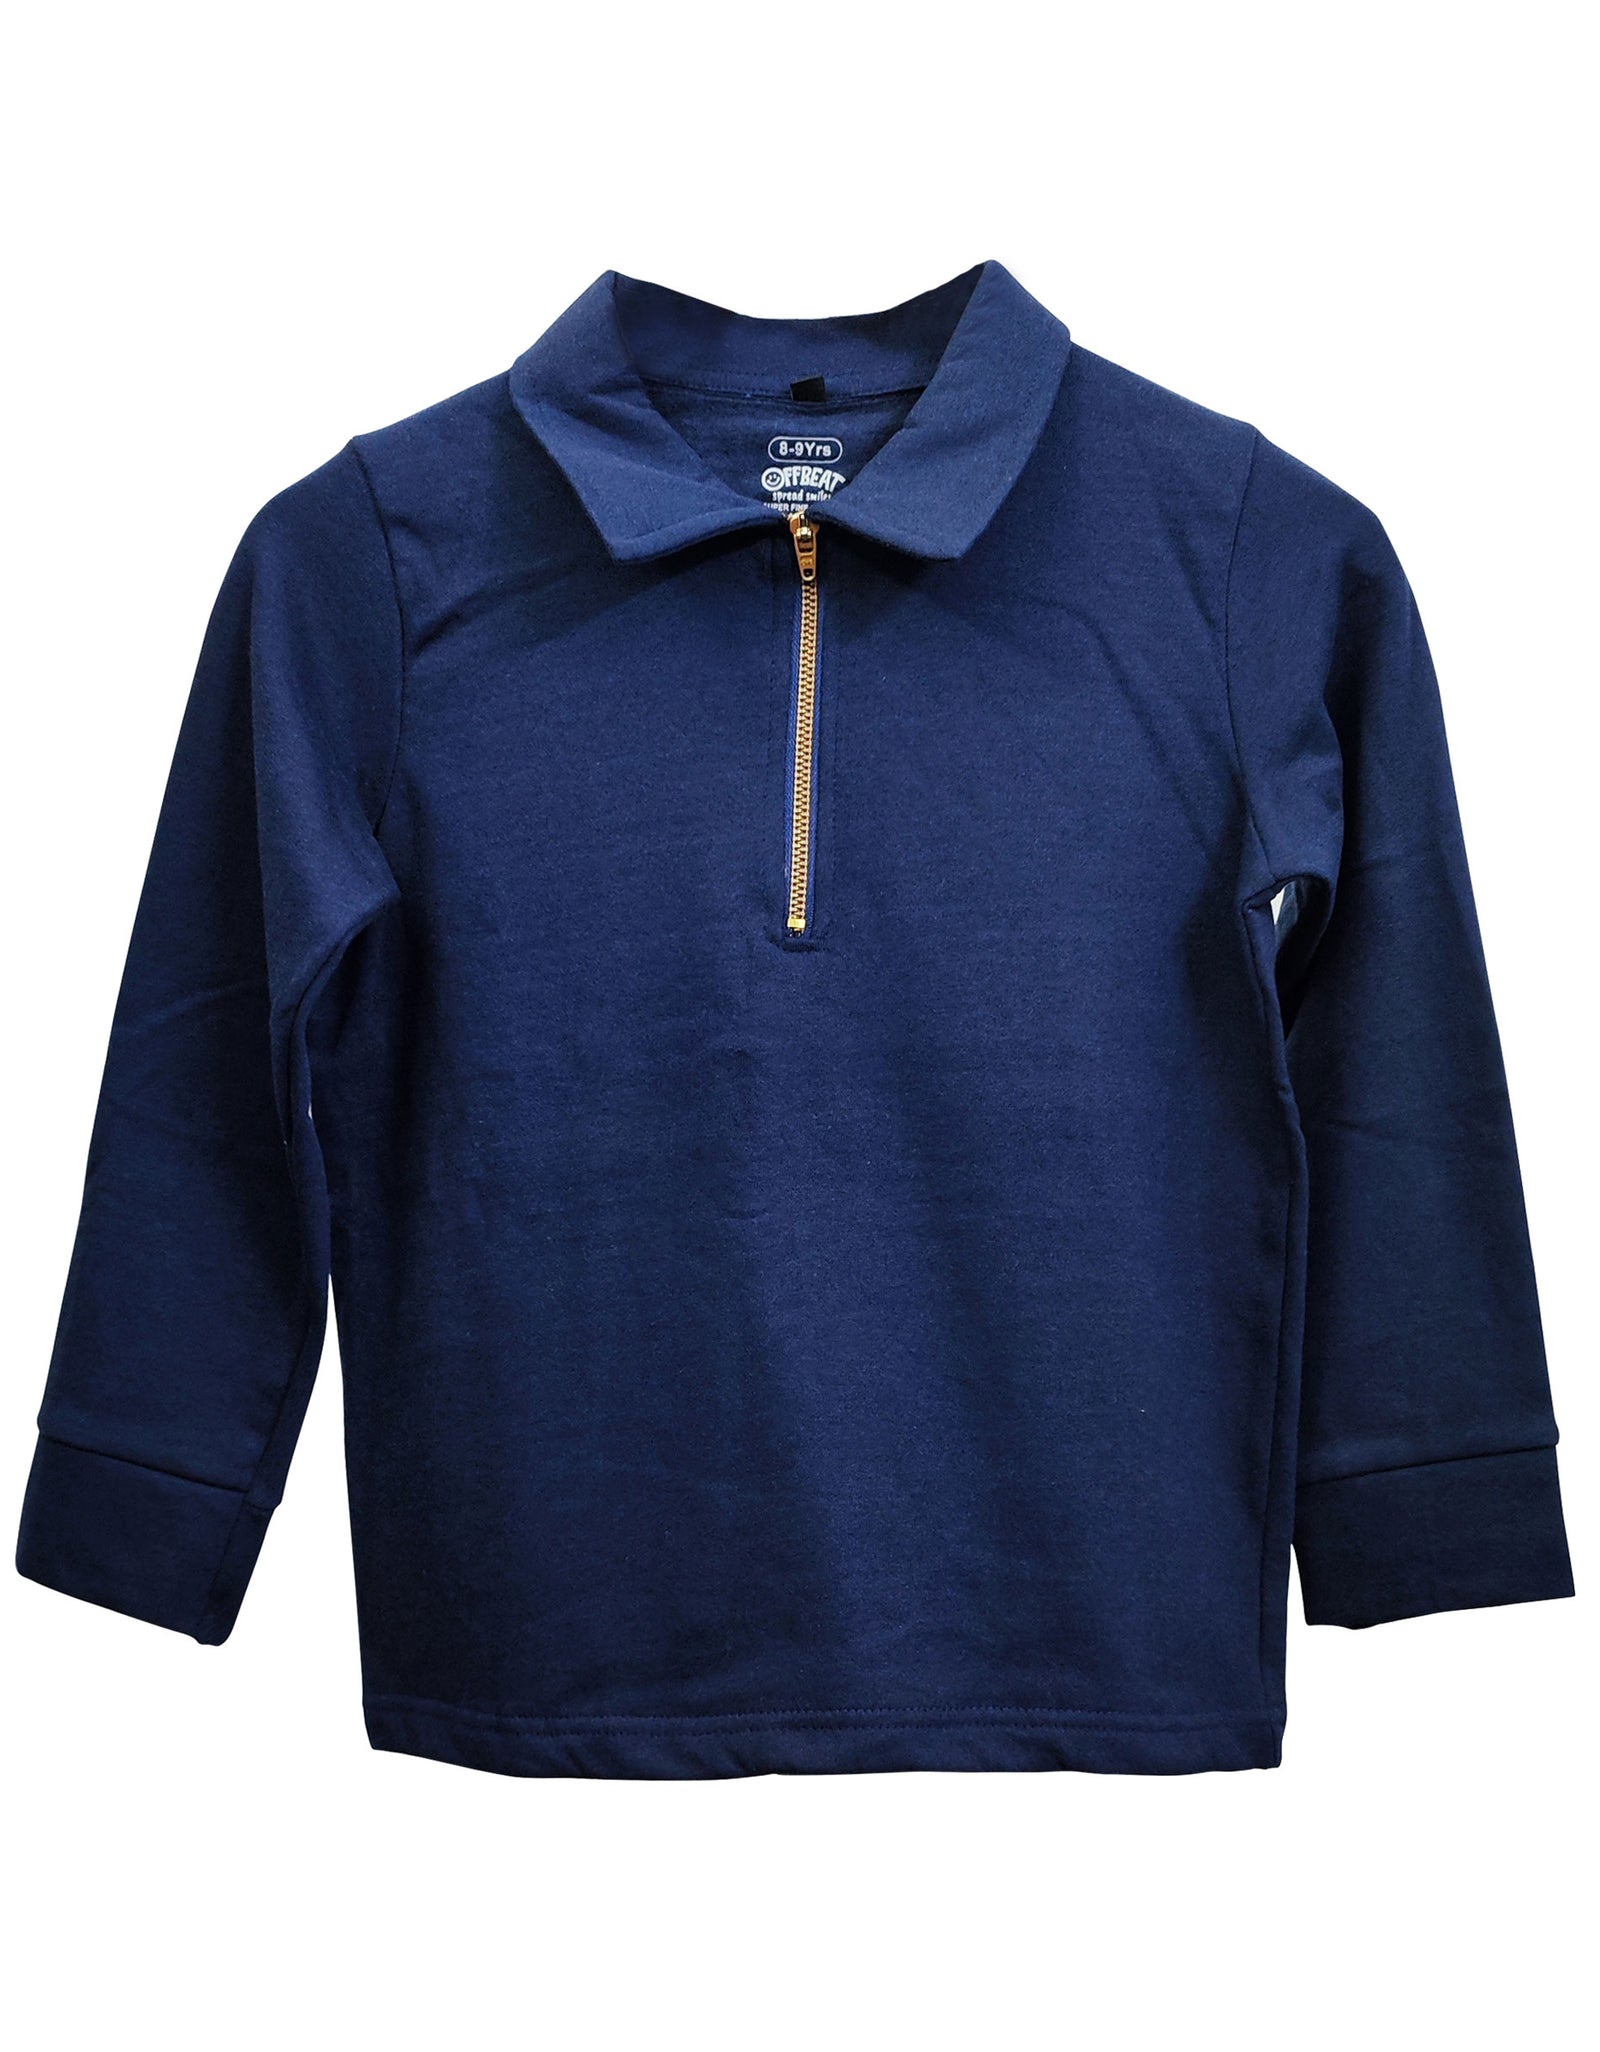 Sweatshirt for Junior  - Navy Blue